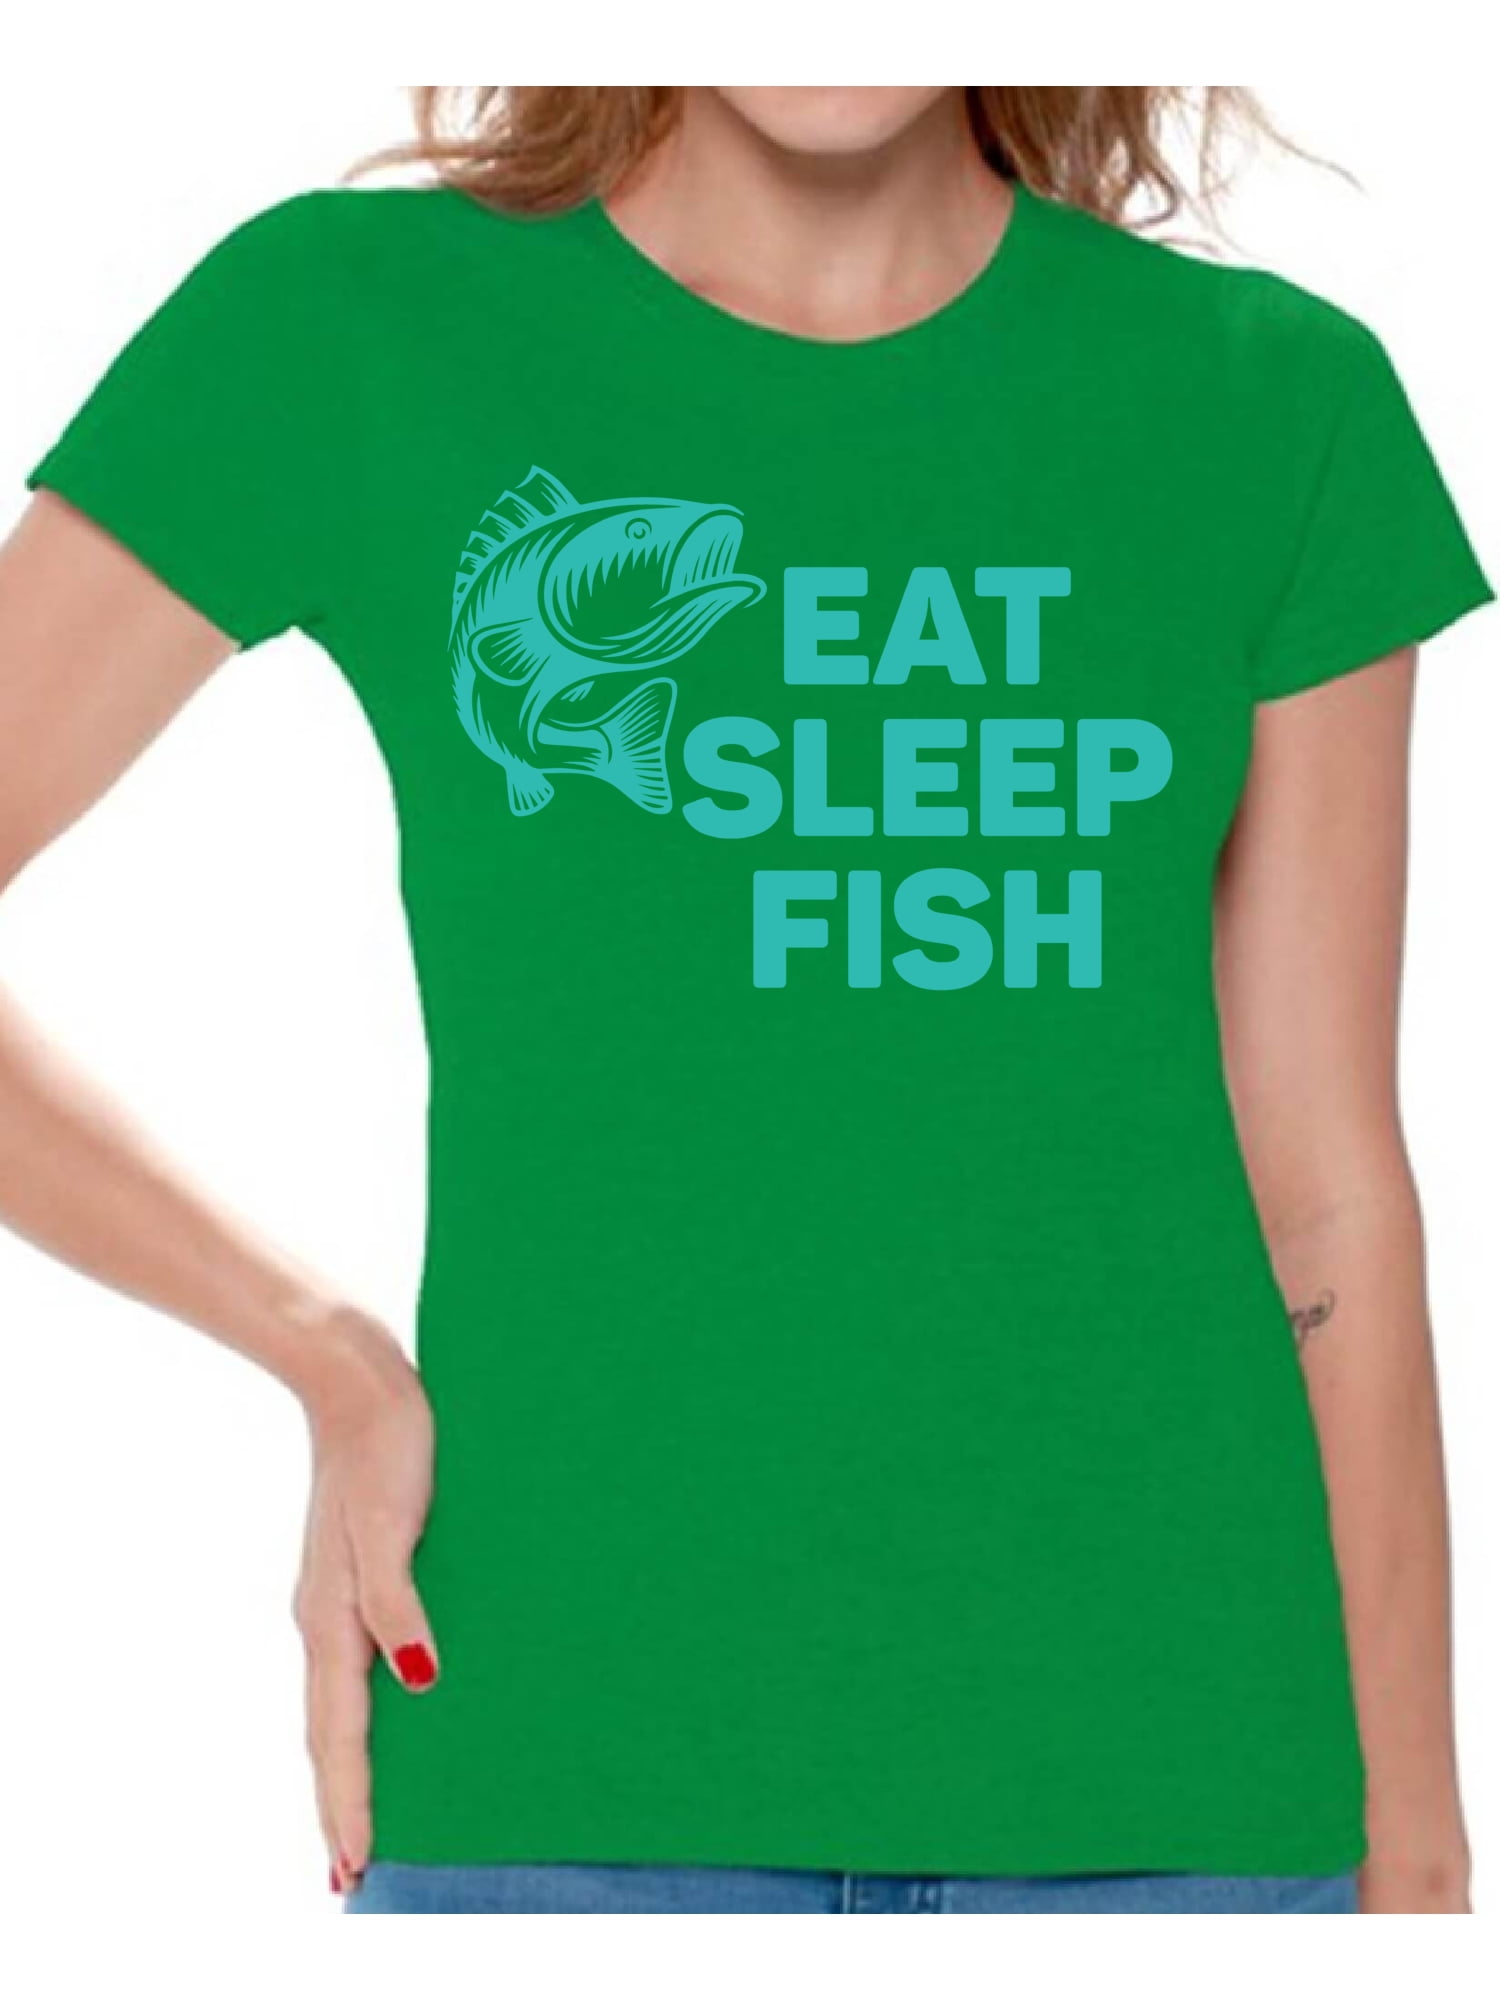 Awkward Styles Eat Sleep Fish Women Tank Top Fisher T Shirt for Wife I Love Fishing Tank Top for Women Fishing Clothes for Her Eat Sleep Fish Tanks